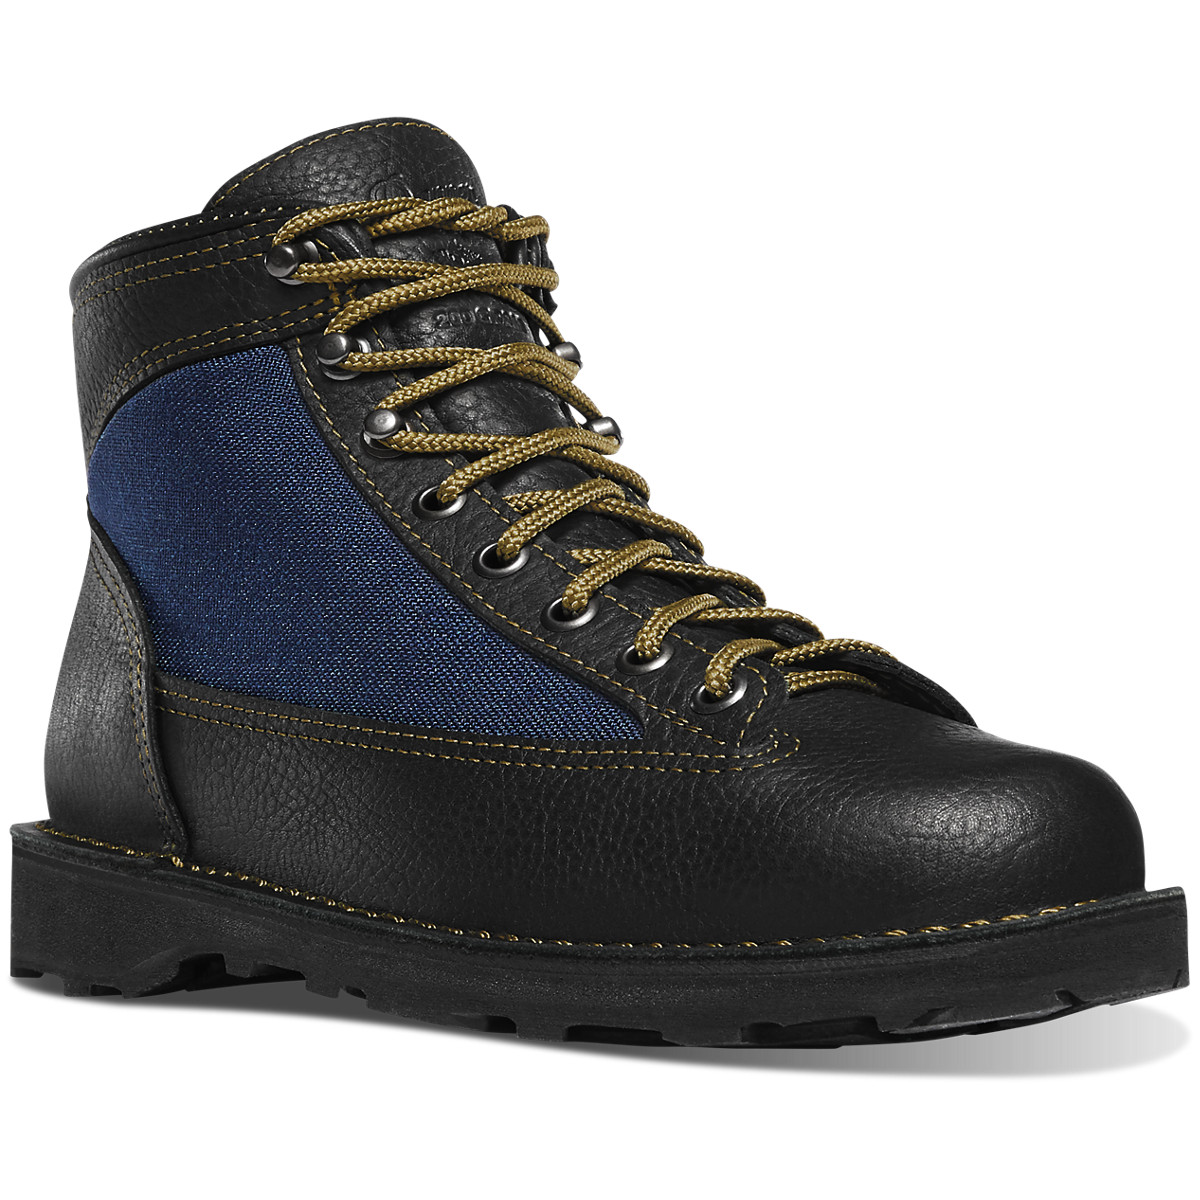 Danner Ridge Arctic Shadow 200G - Chaussures Randonnée Noir/Bleu - Femme ( France 28561PABK )